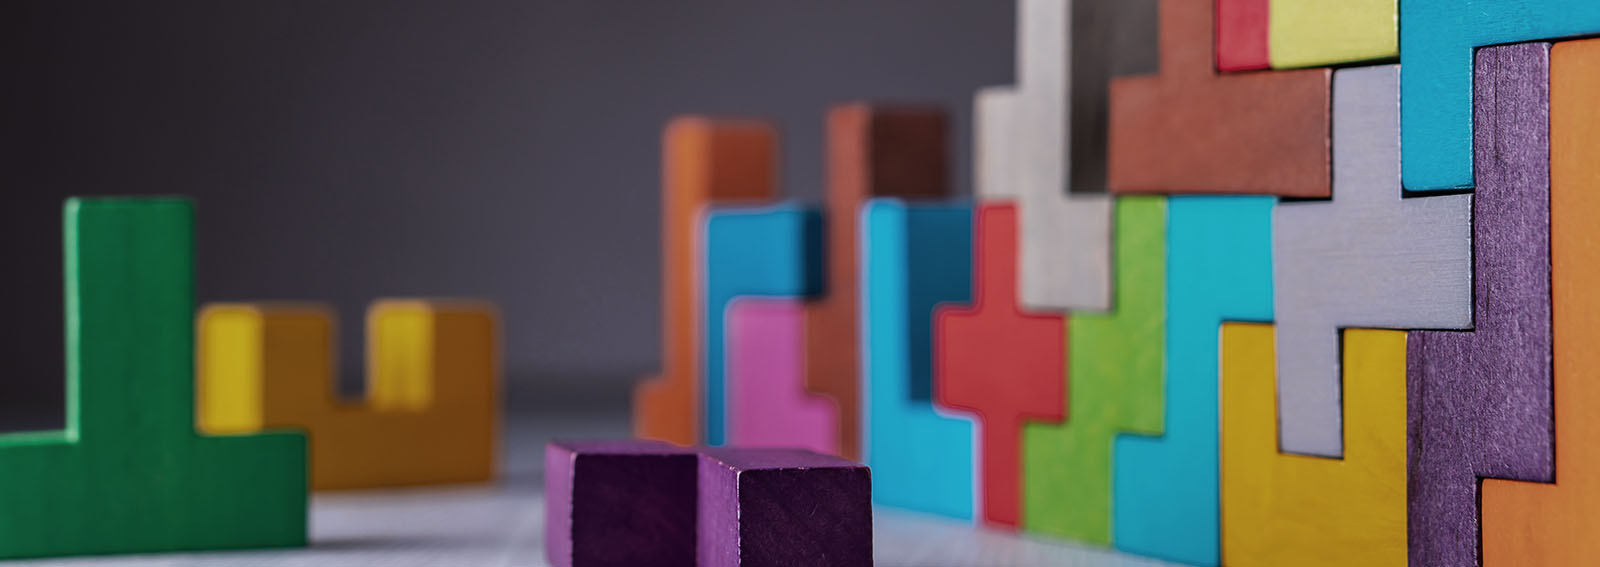 colorful blocks on a desk